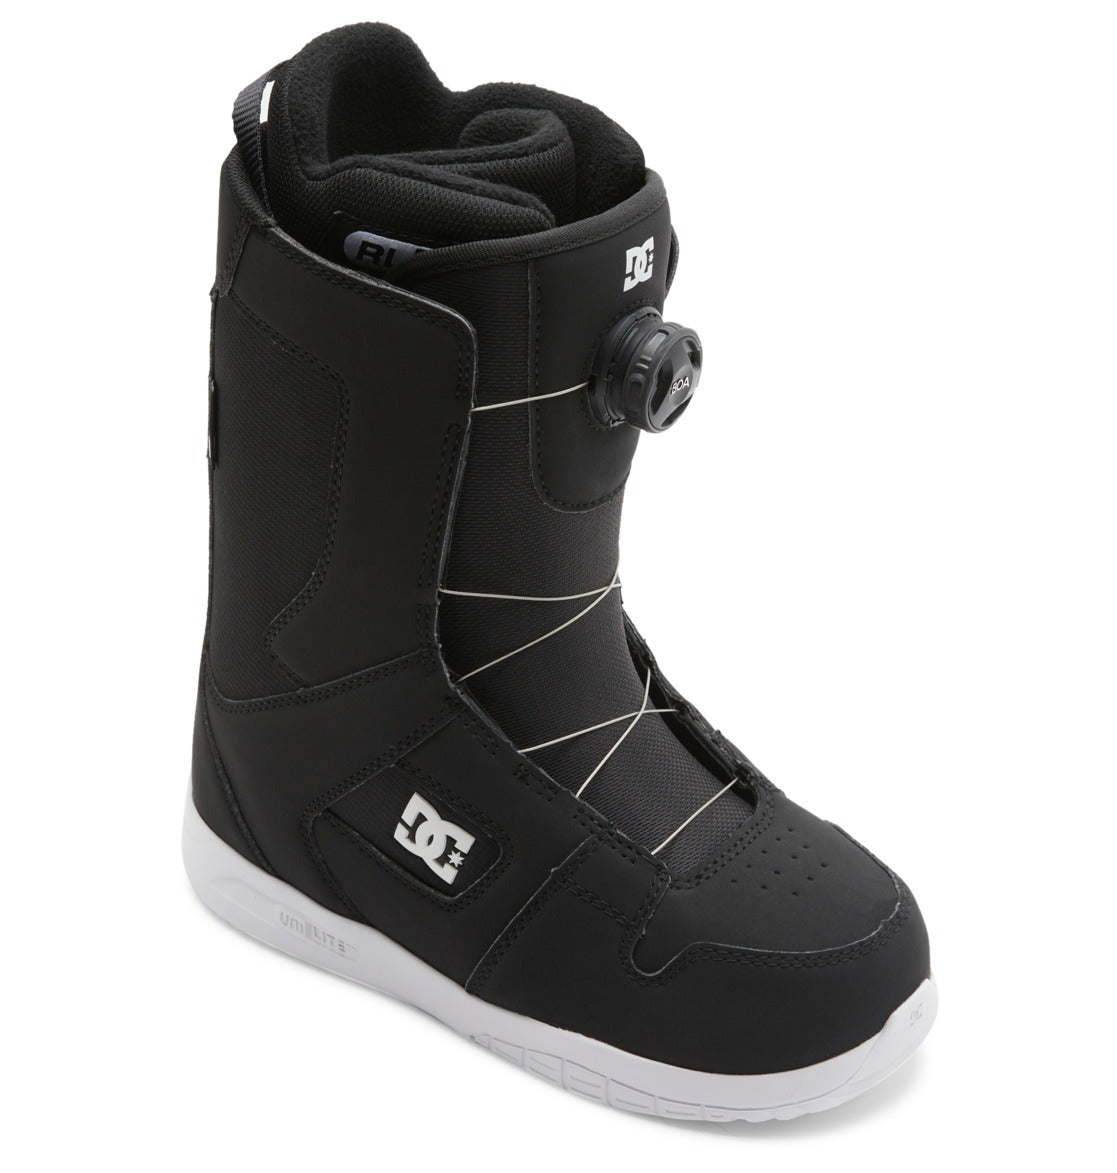 DC Womens Phase BOA Snowboard Boots Black White